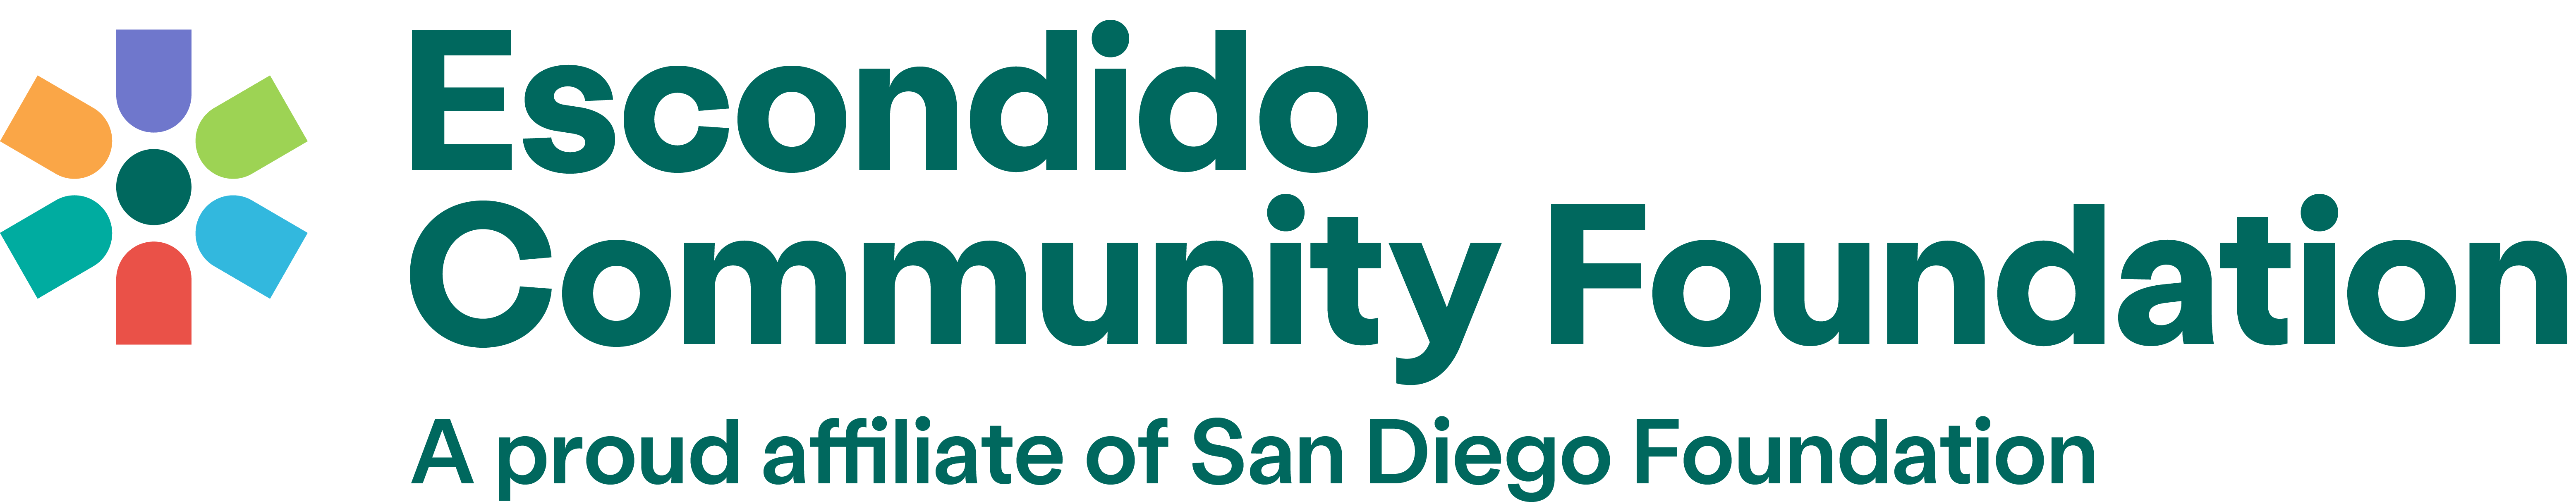 The Escondido Community Foundation, an affiliate of The San Diego Foundation logo